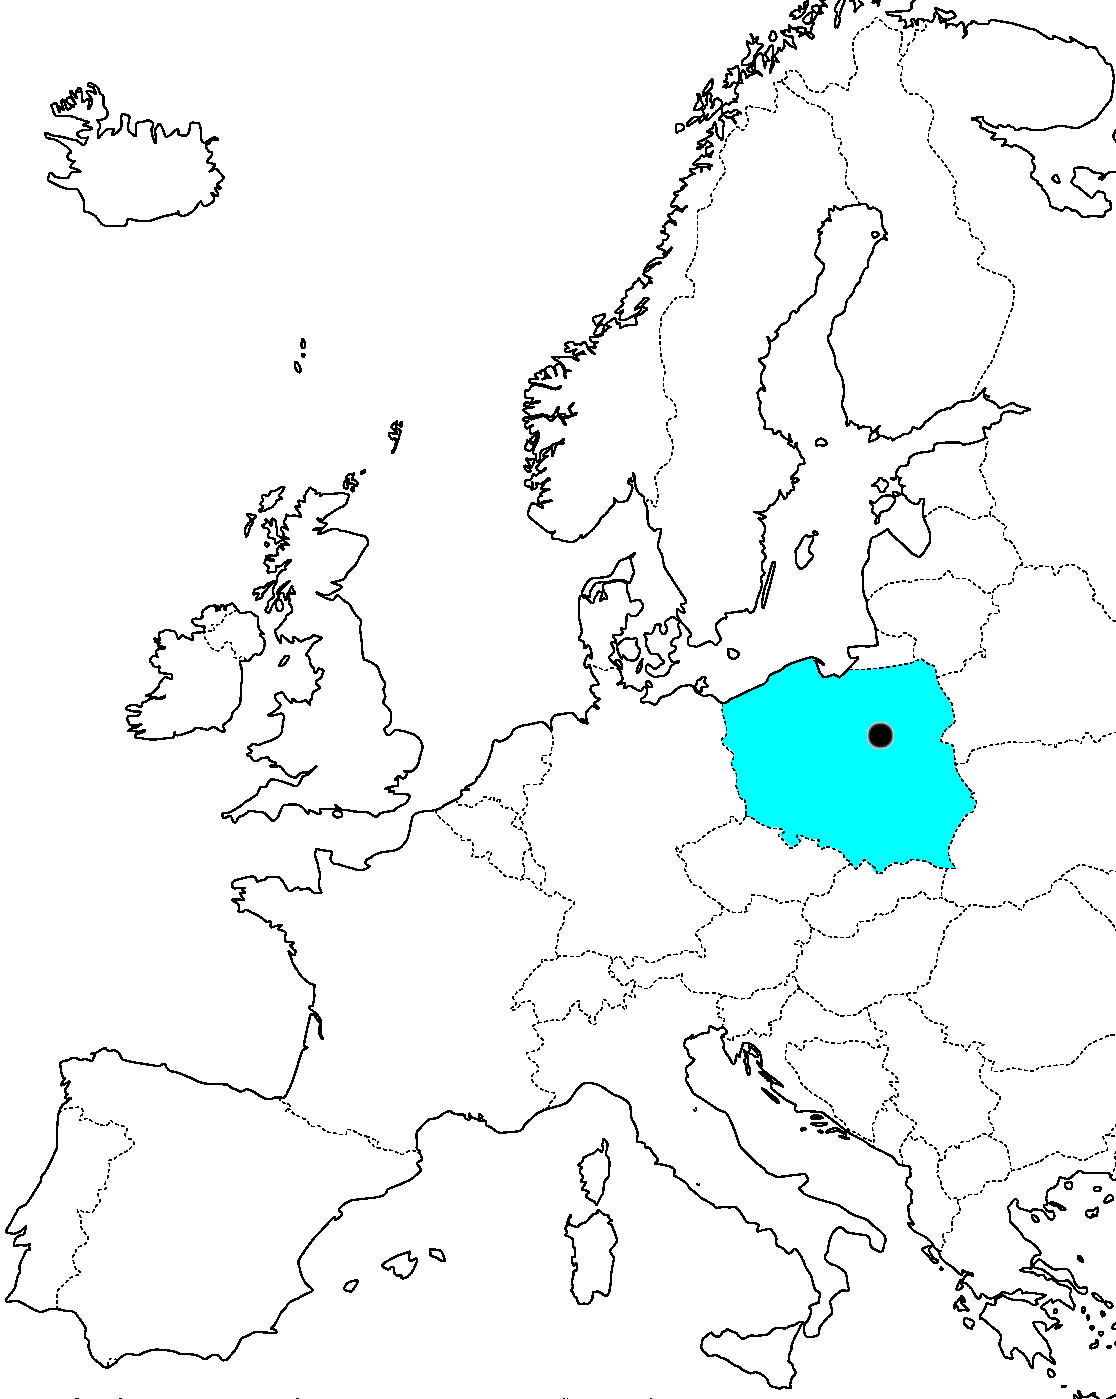 Mapa Evropy